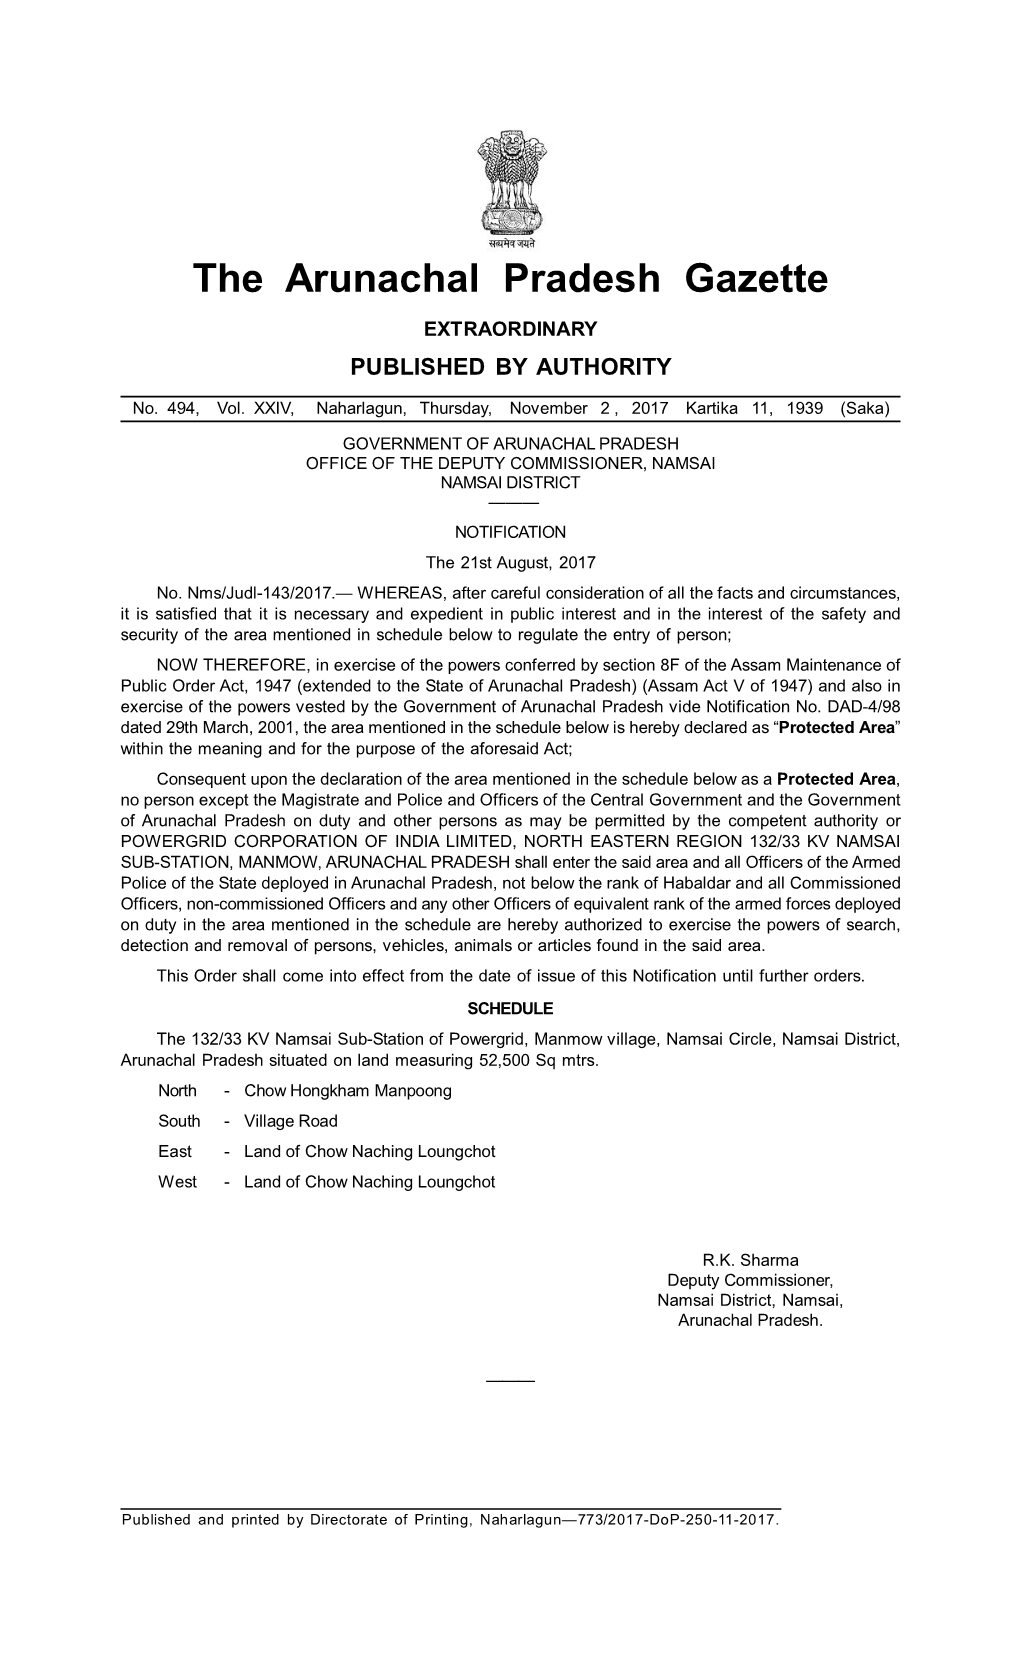 The Arunachal Pradesh Gazette EXTRAORDINARY PUBLISHED by AUTHORITY